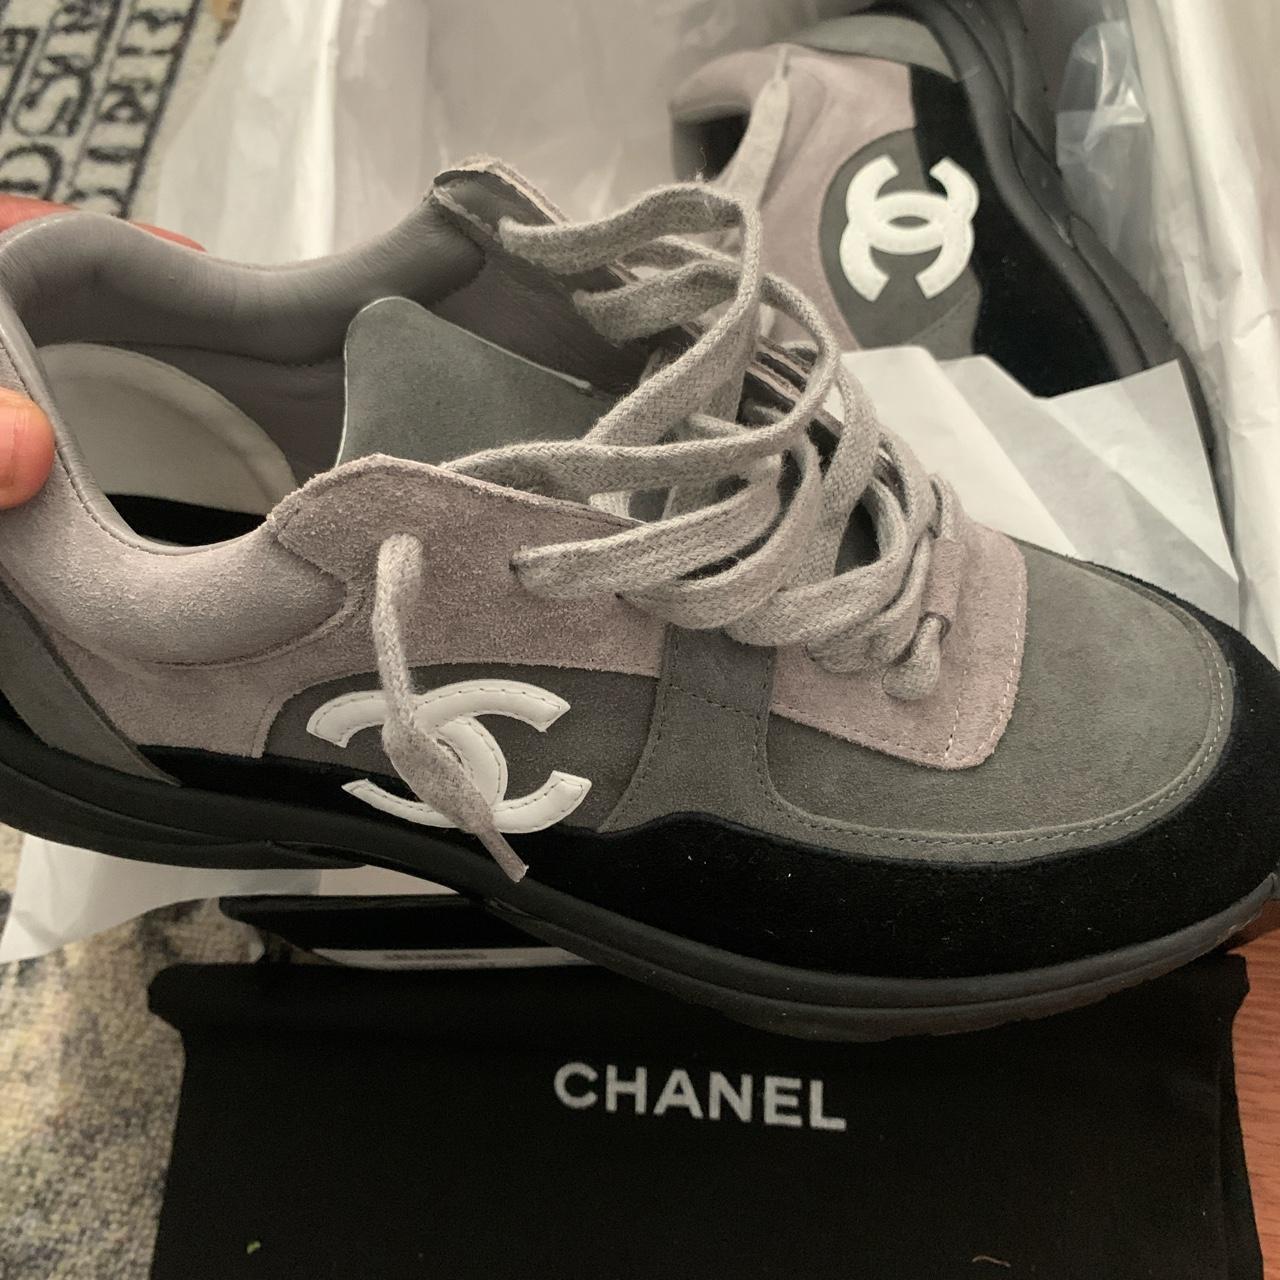 Black/grey Chanel shoes 👟 Size : 43 / 9.5 TEXT B4... - Depop